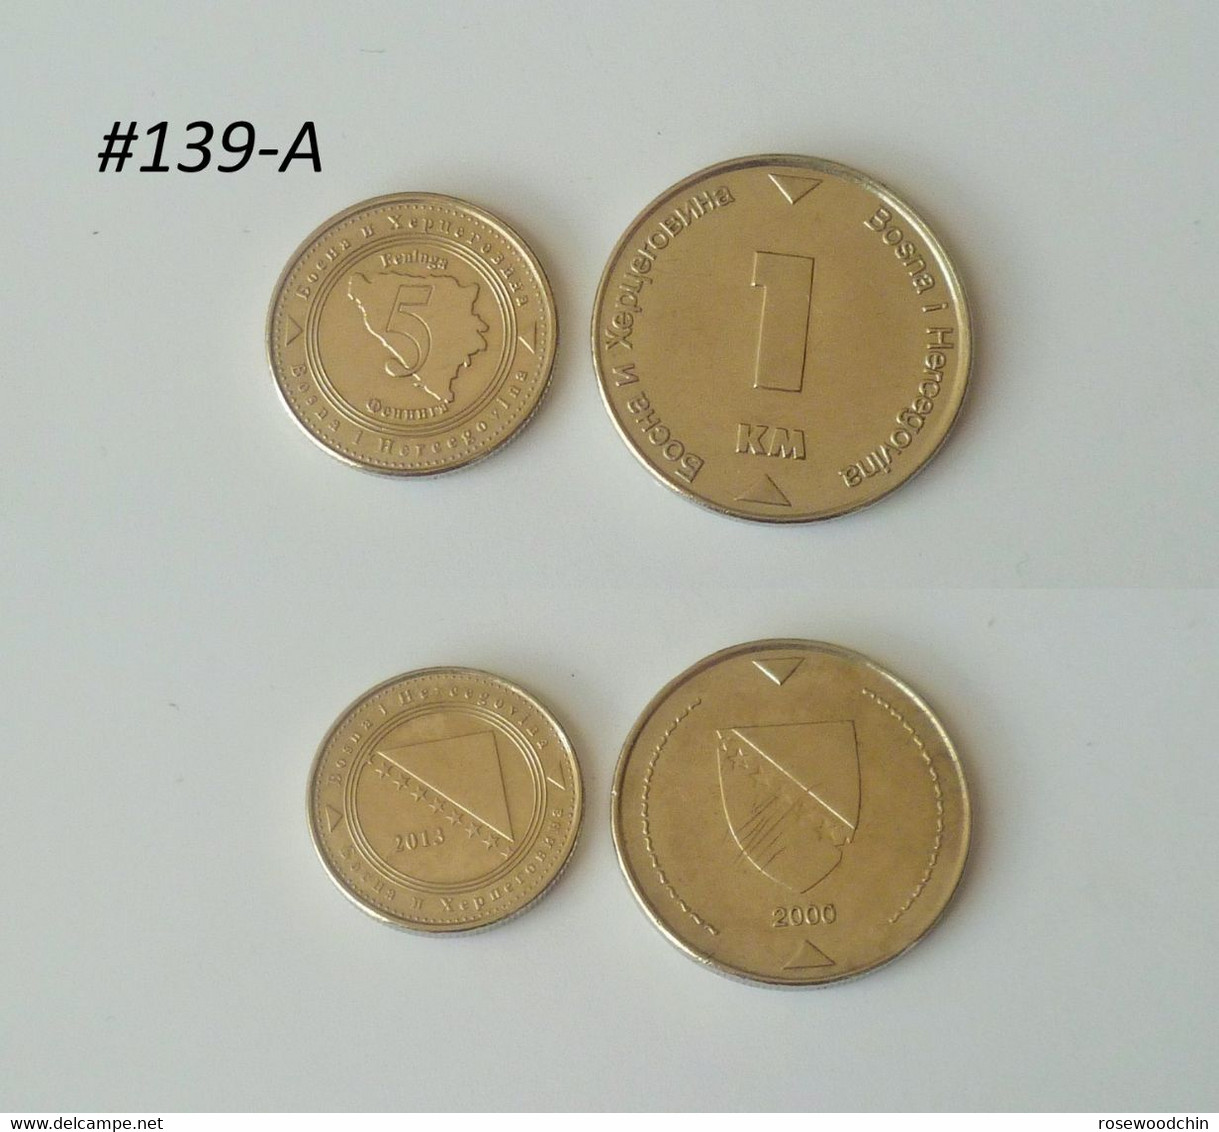 Vintage ! One Lot Of Bosna /Bosnia 2000- 1 Mark & 2013- 5 Feninga Coin (#139-A) - Bosnia And Herzegovina